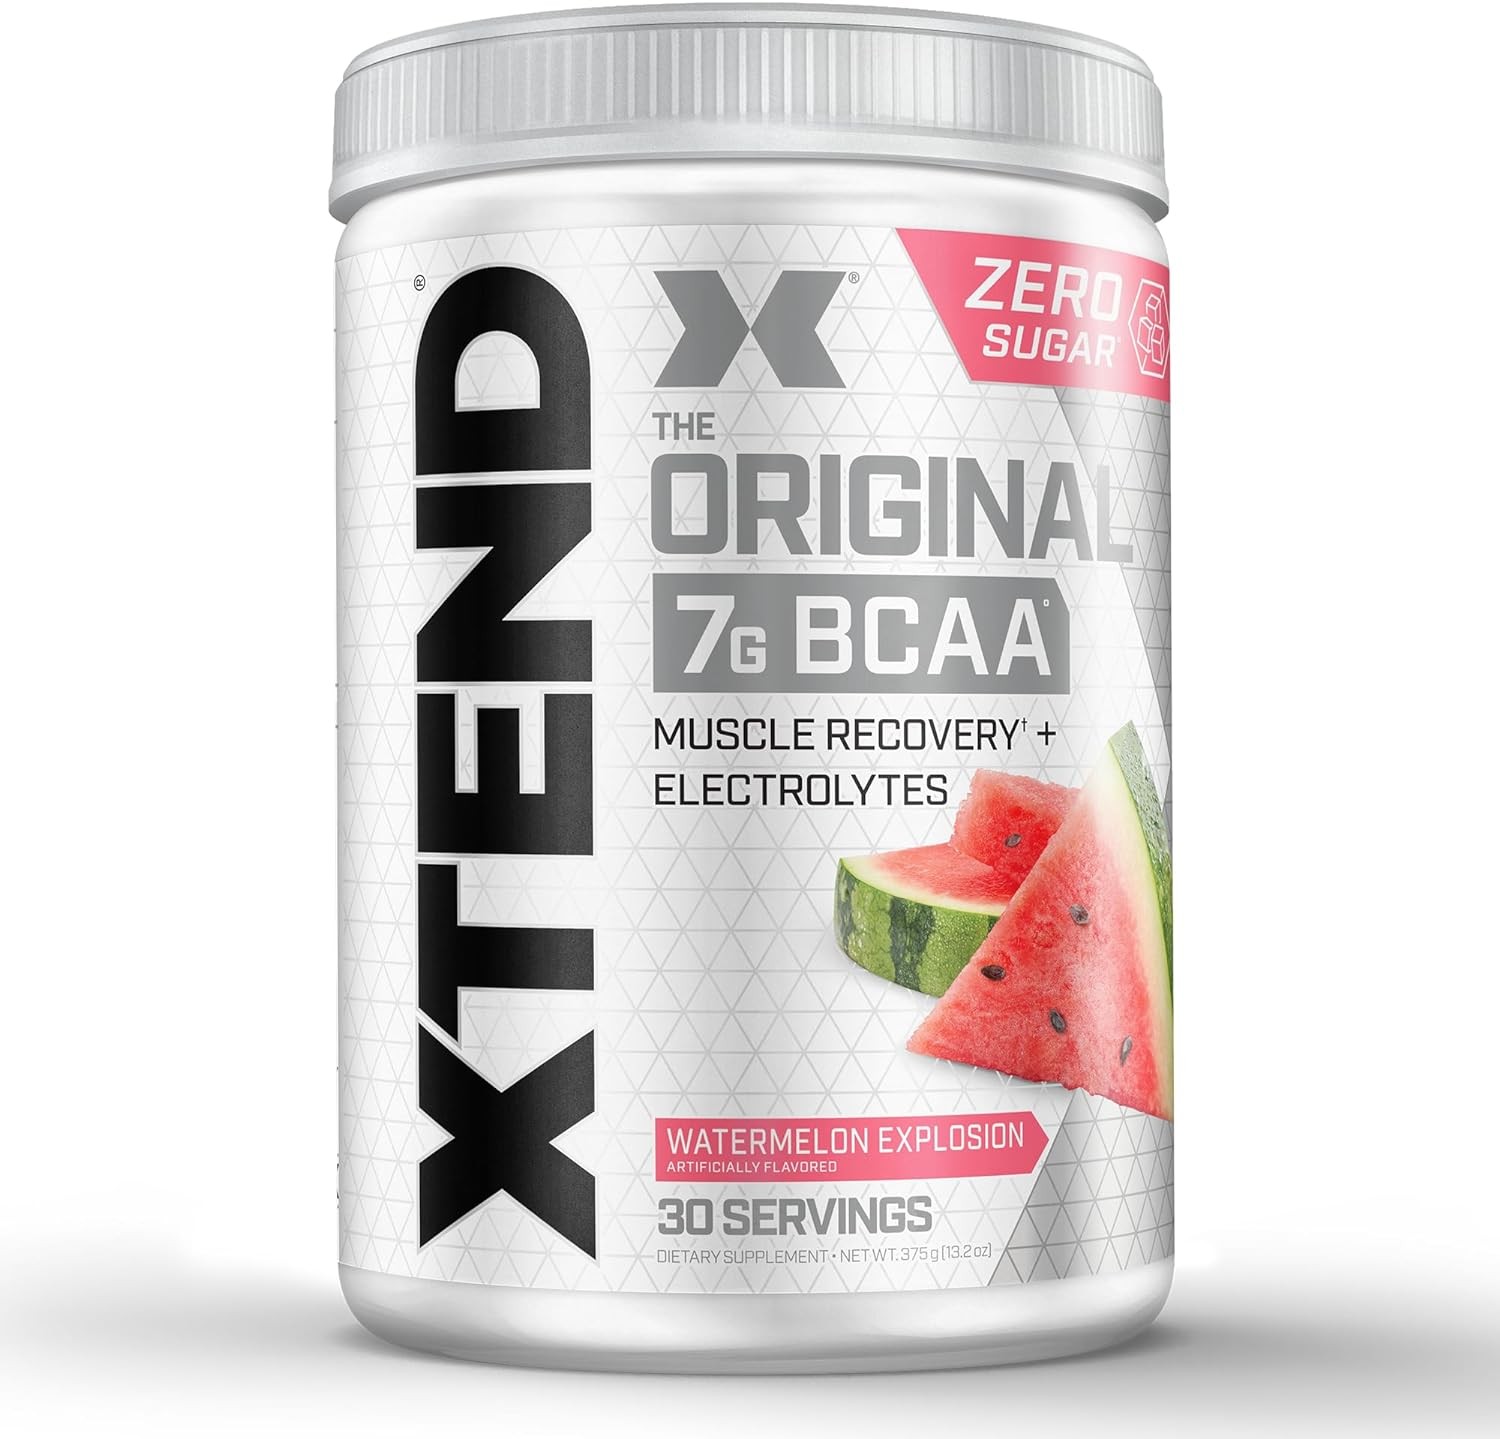 XTEND Original BCAA Powder Watermelon Explosion - Sugar Free